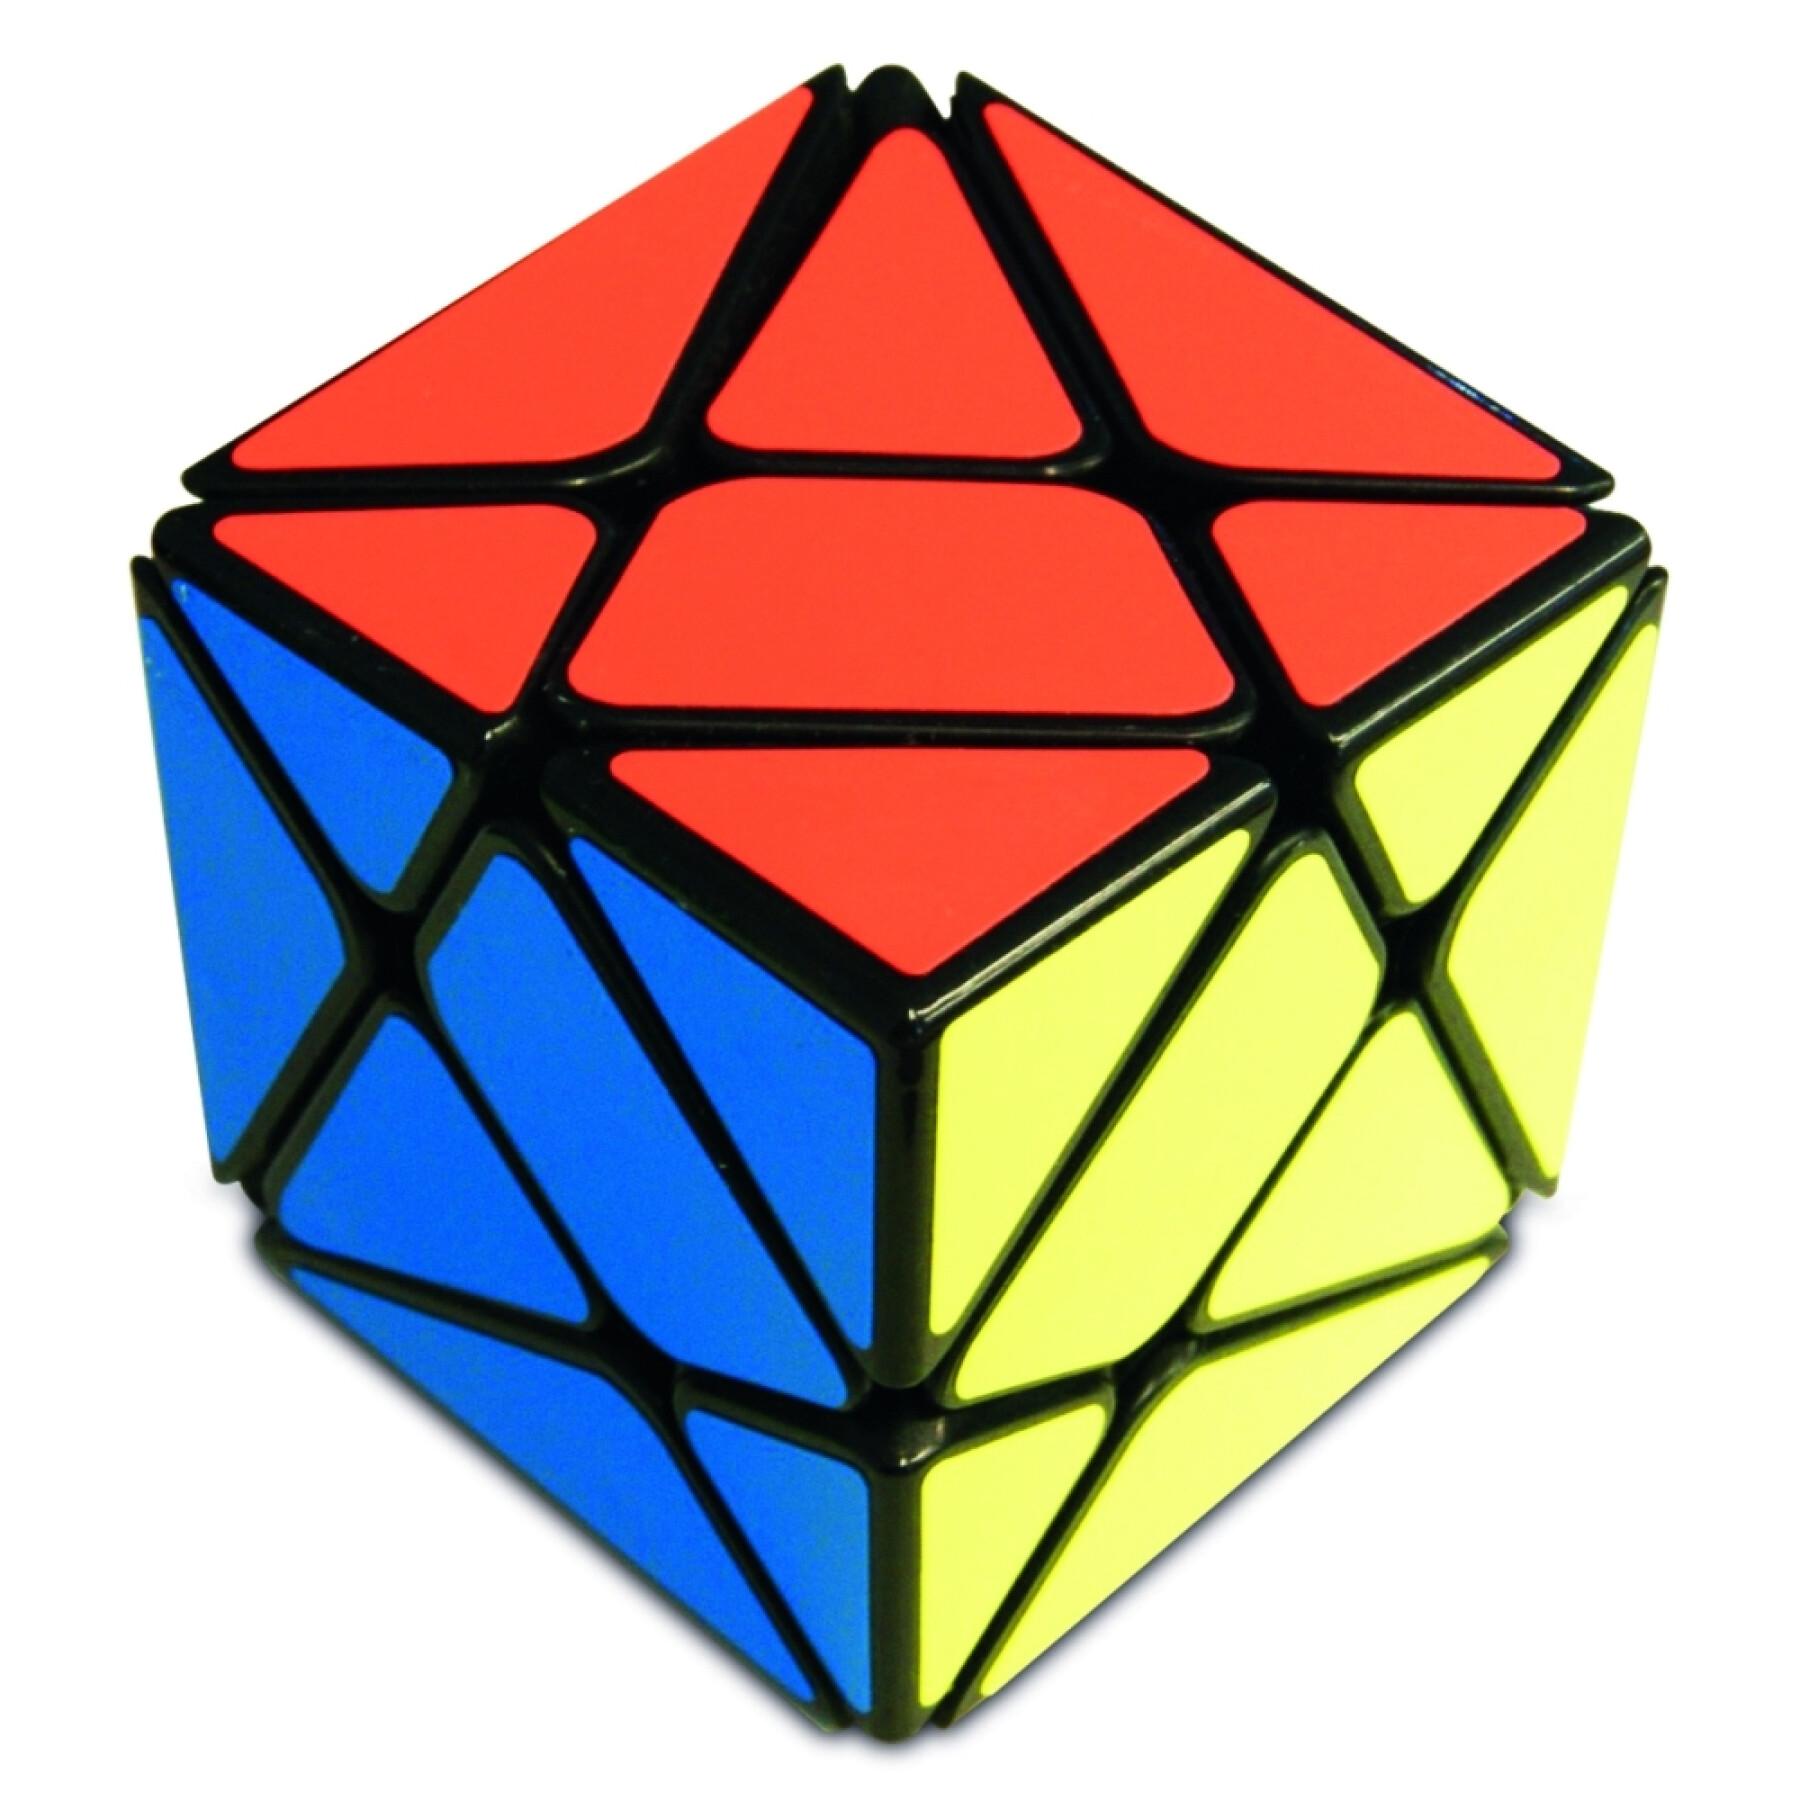 Magic Cube Cayro Axis